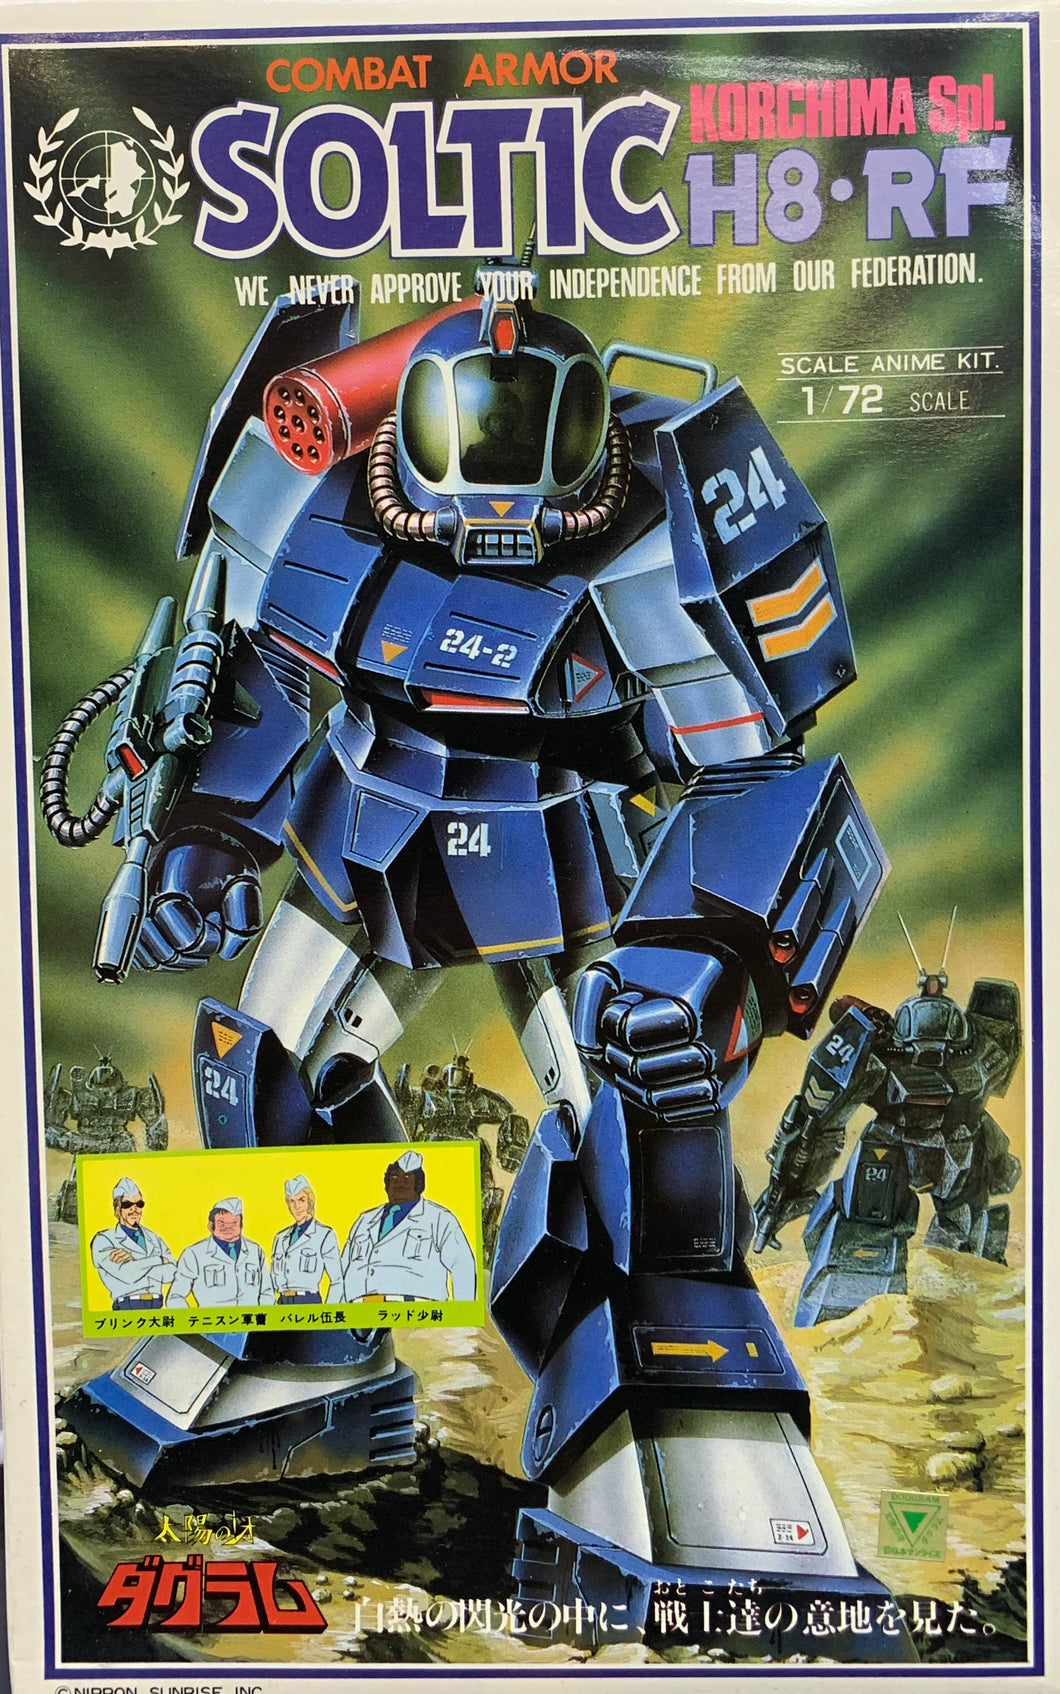 Combat Armor Soltic H8-RF Korchima Spl.  1/72 1982 ISSUE